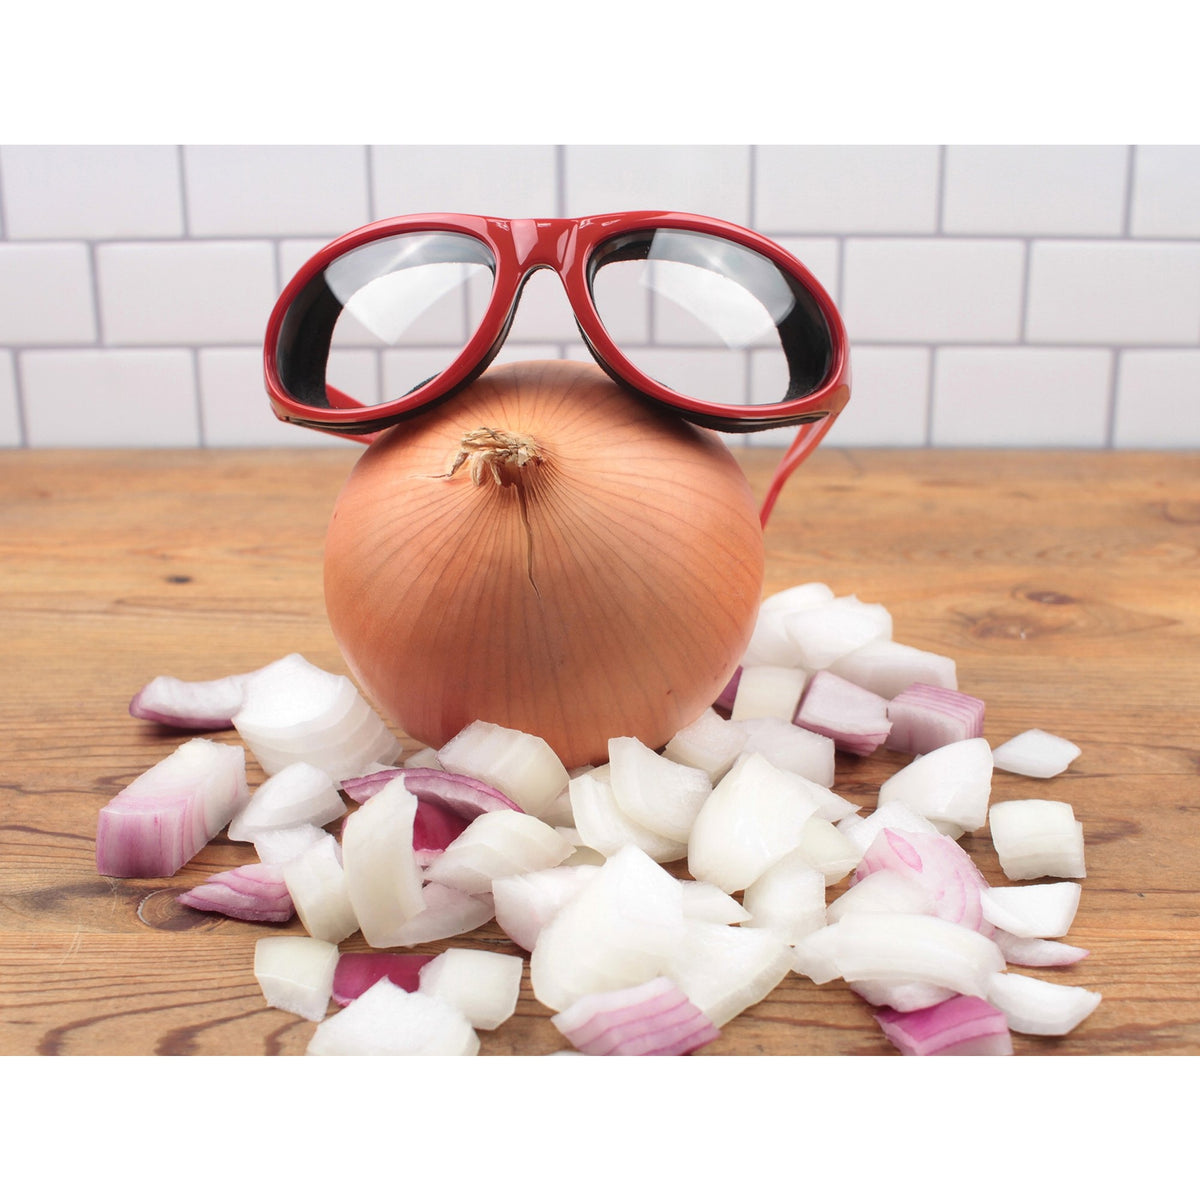 RSVP International Onion Goggles - Red Frame